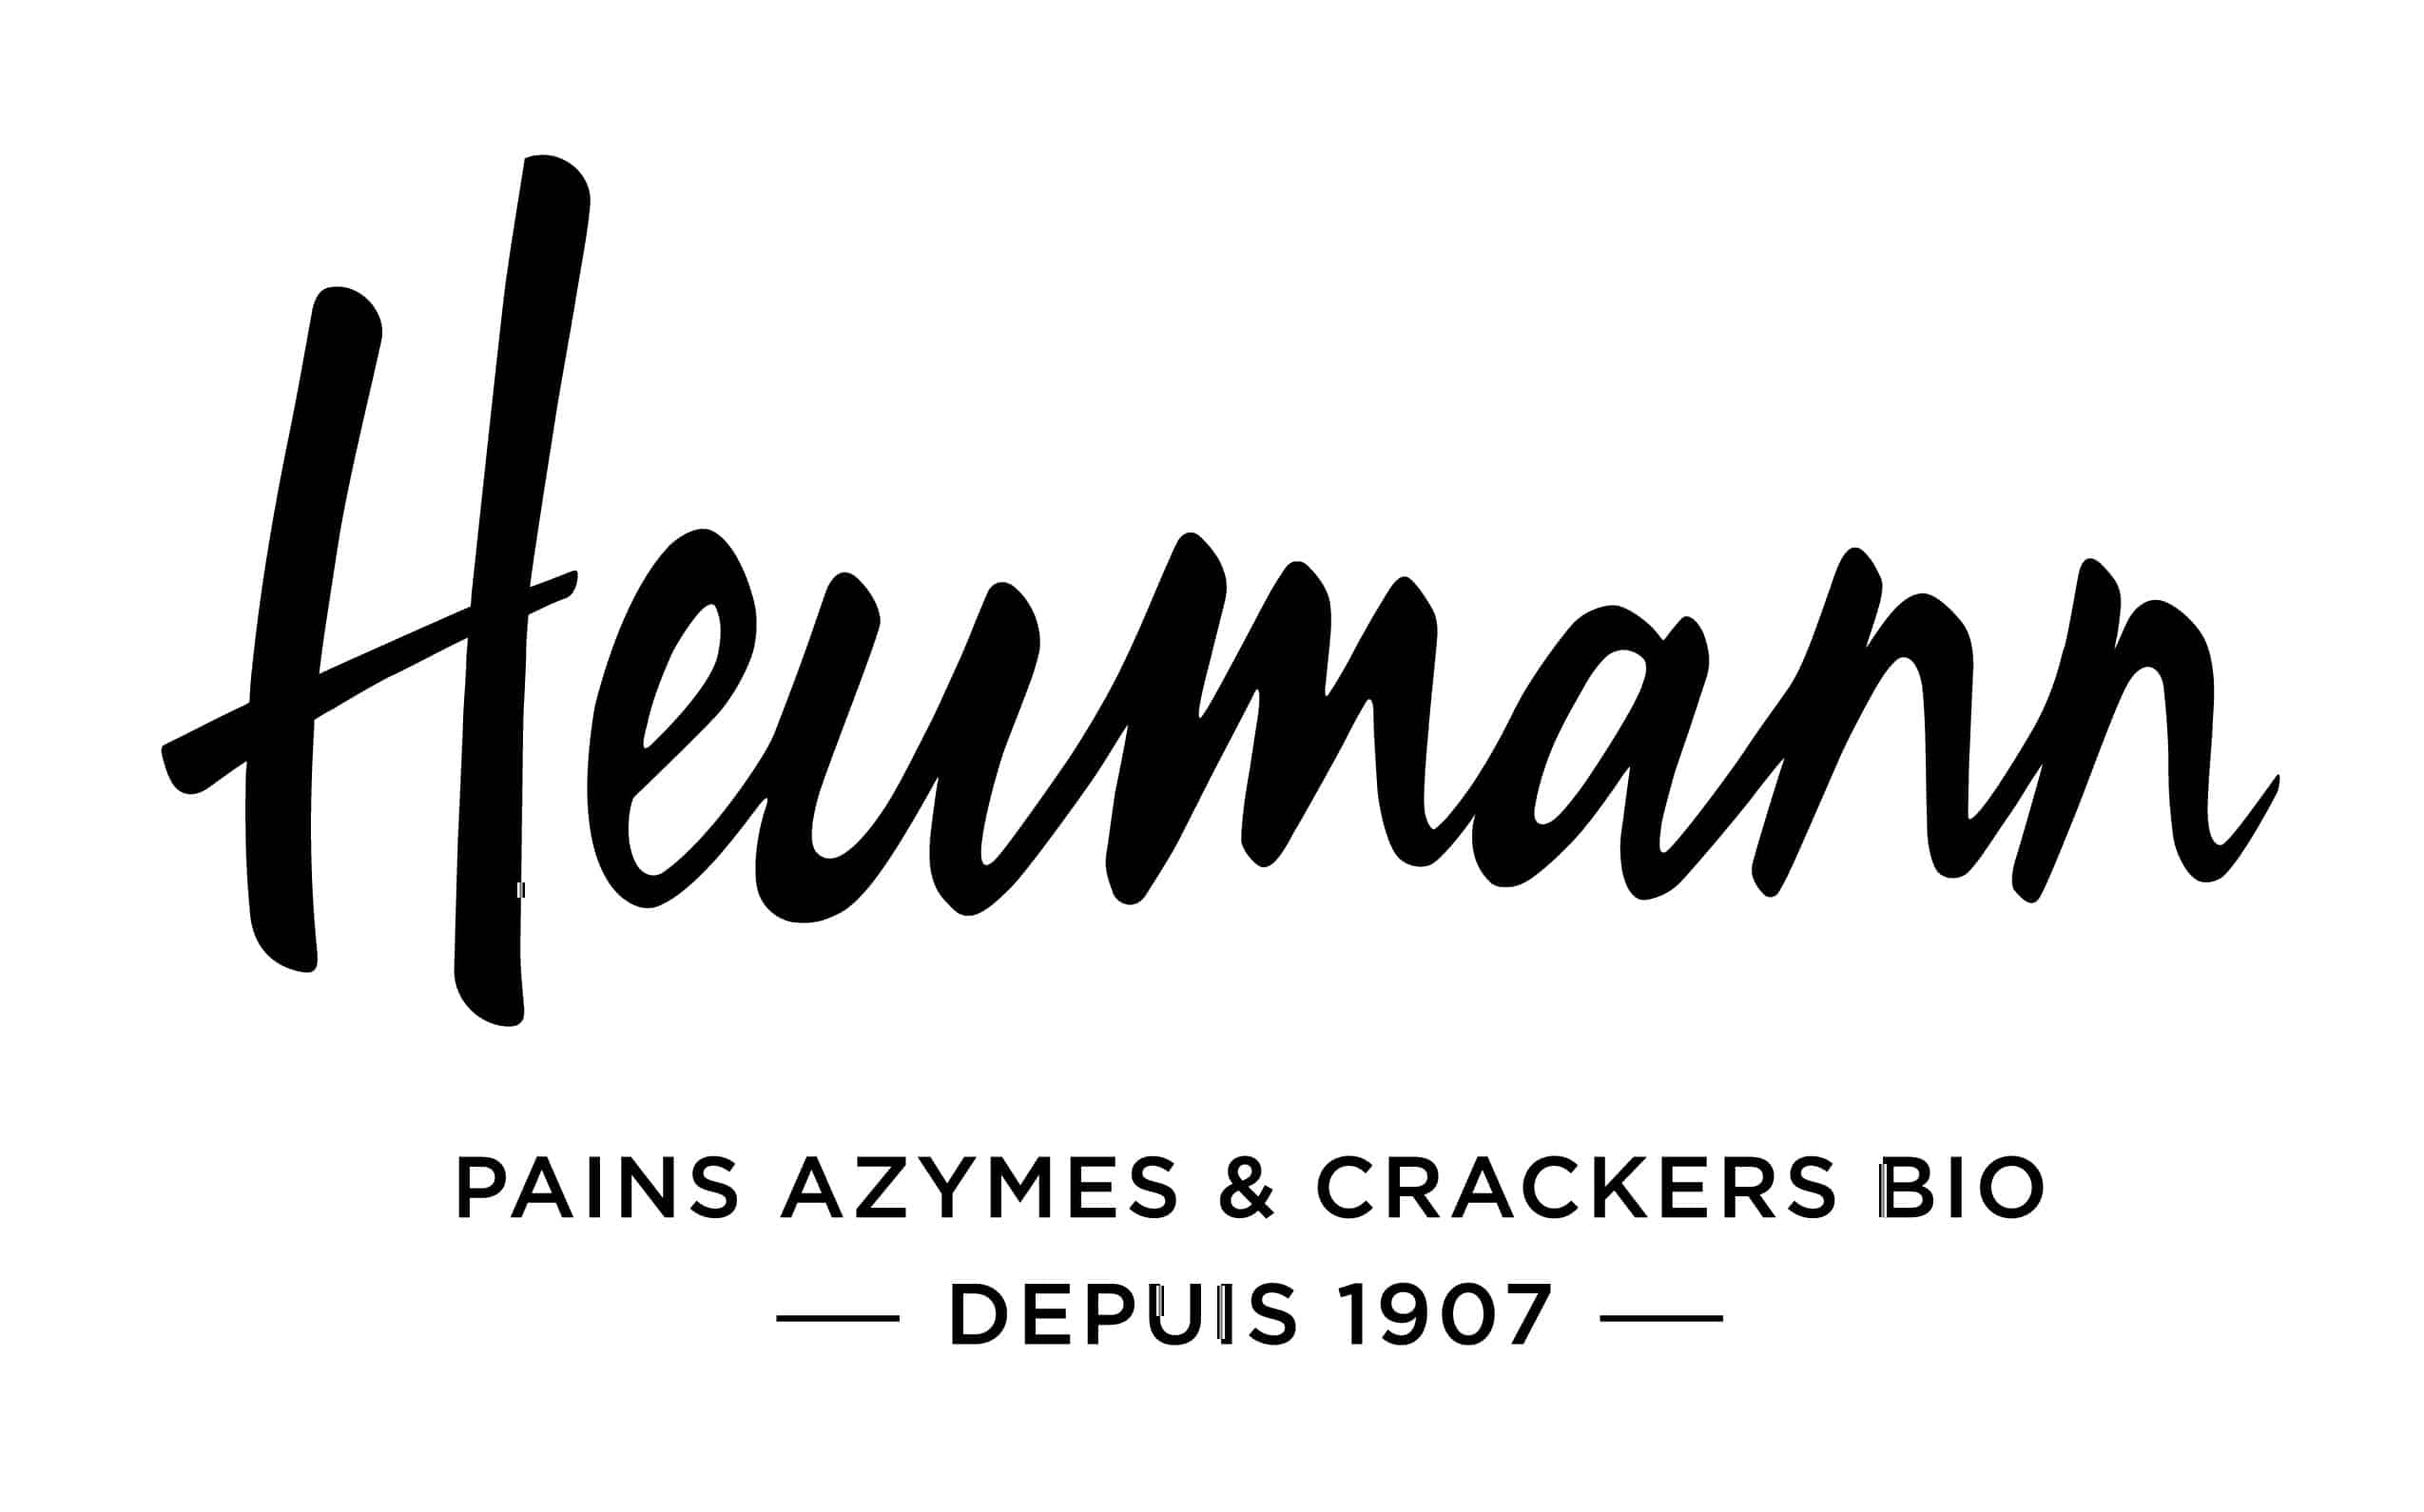 Heumann_logo_BL_FR_PRINT